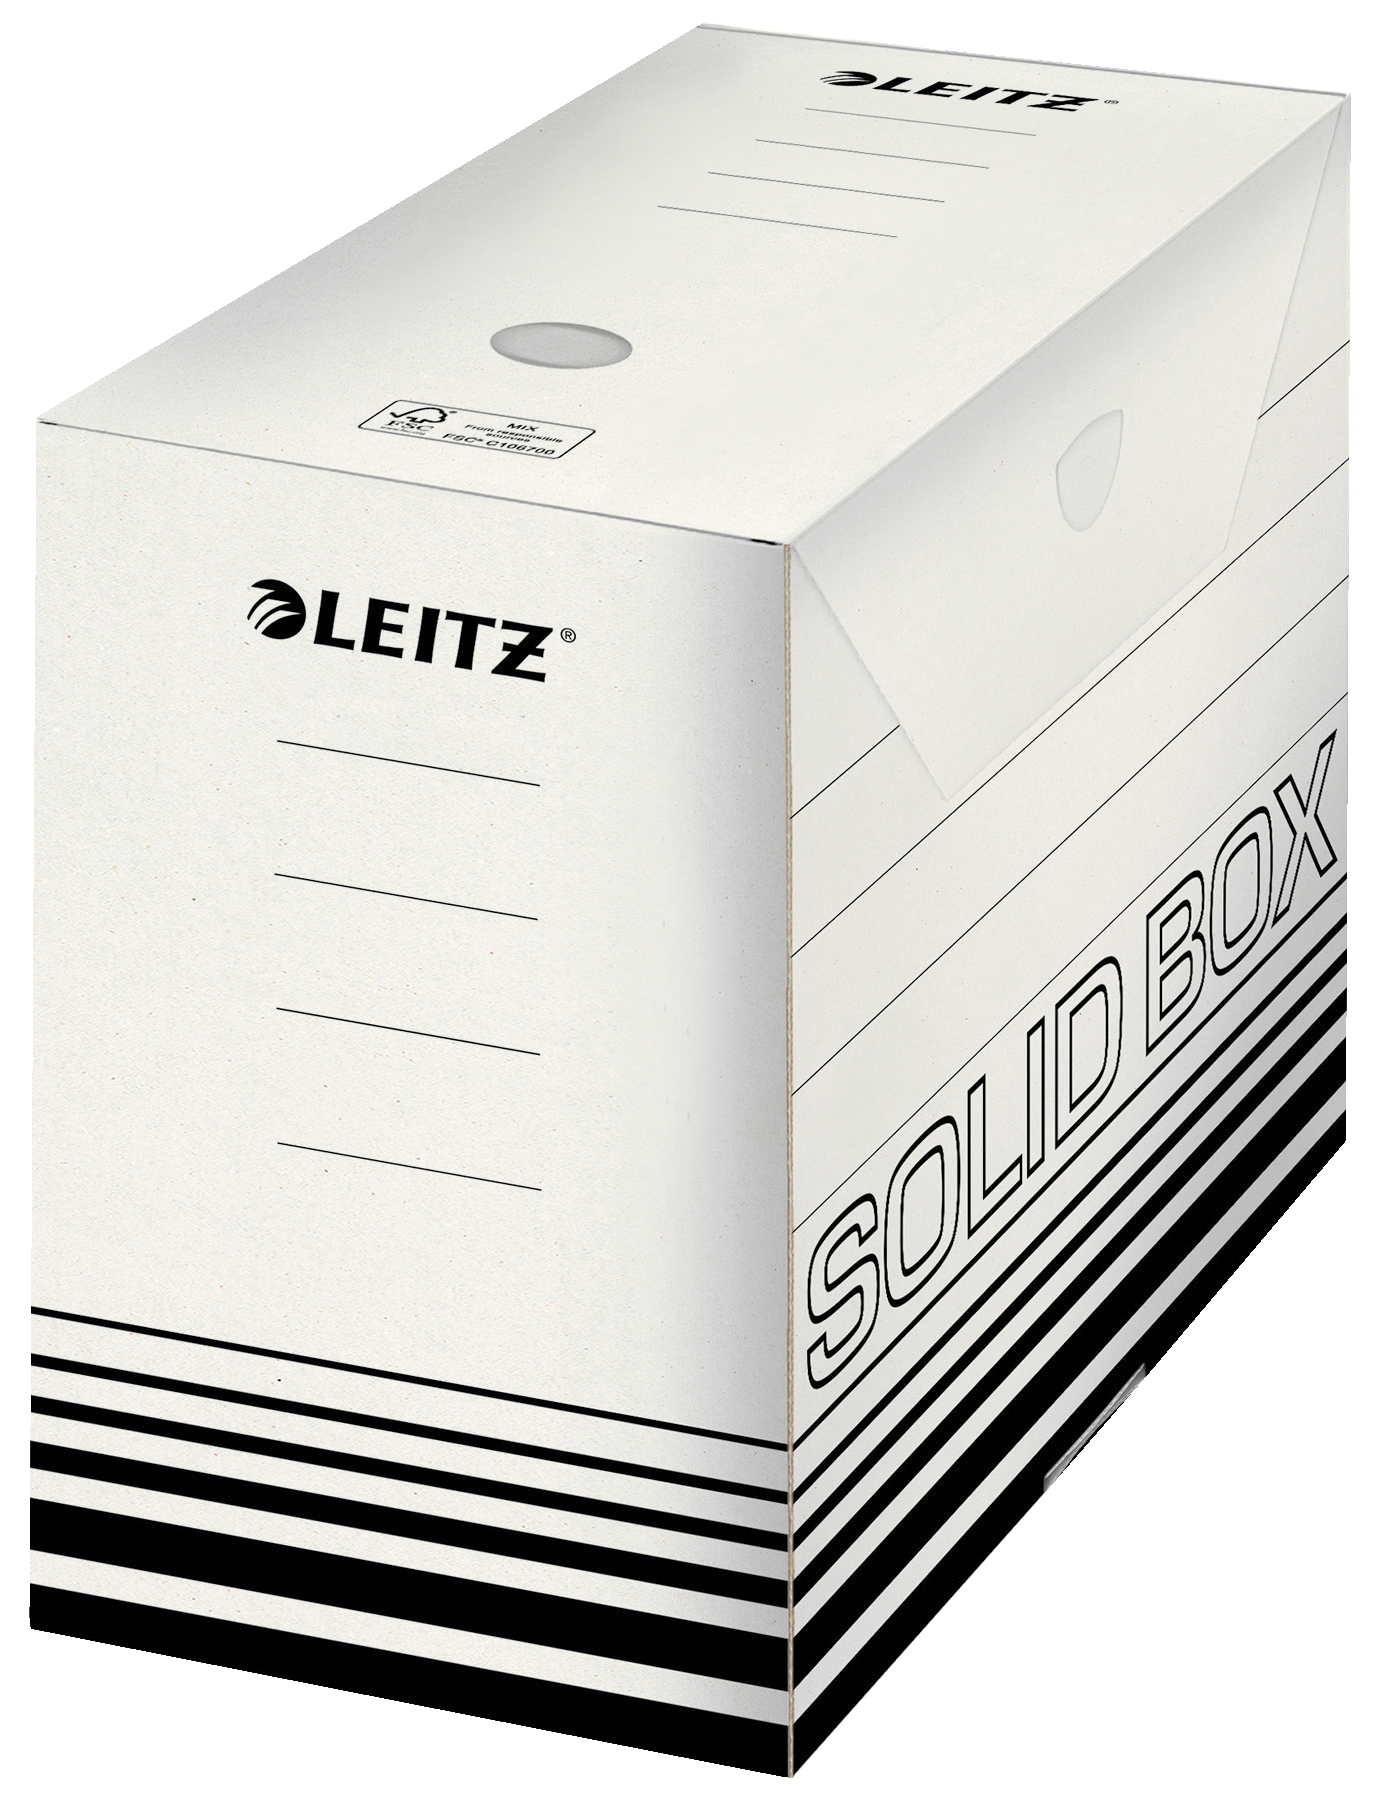 LEITZ Solid Box A4 6129-00-01 blanc 150x257x330mm